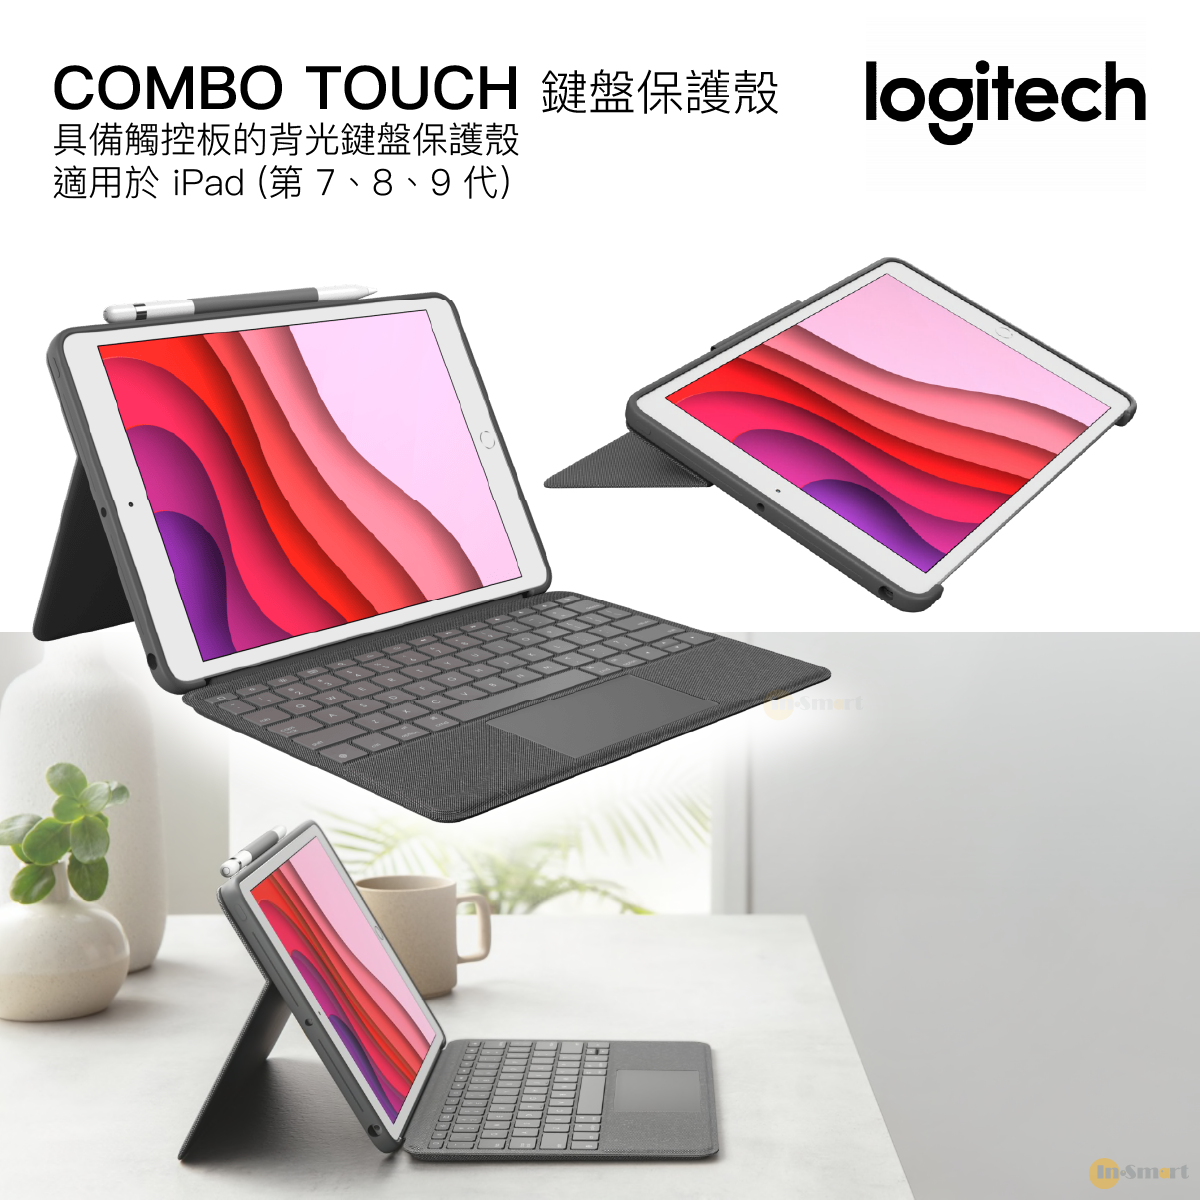 Logitech | COMBO TOUCH 配備觸控板與Smart Connector 適用於 